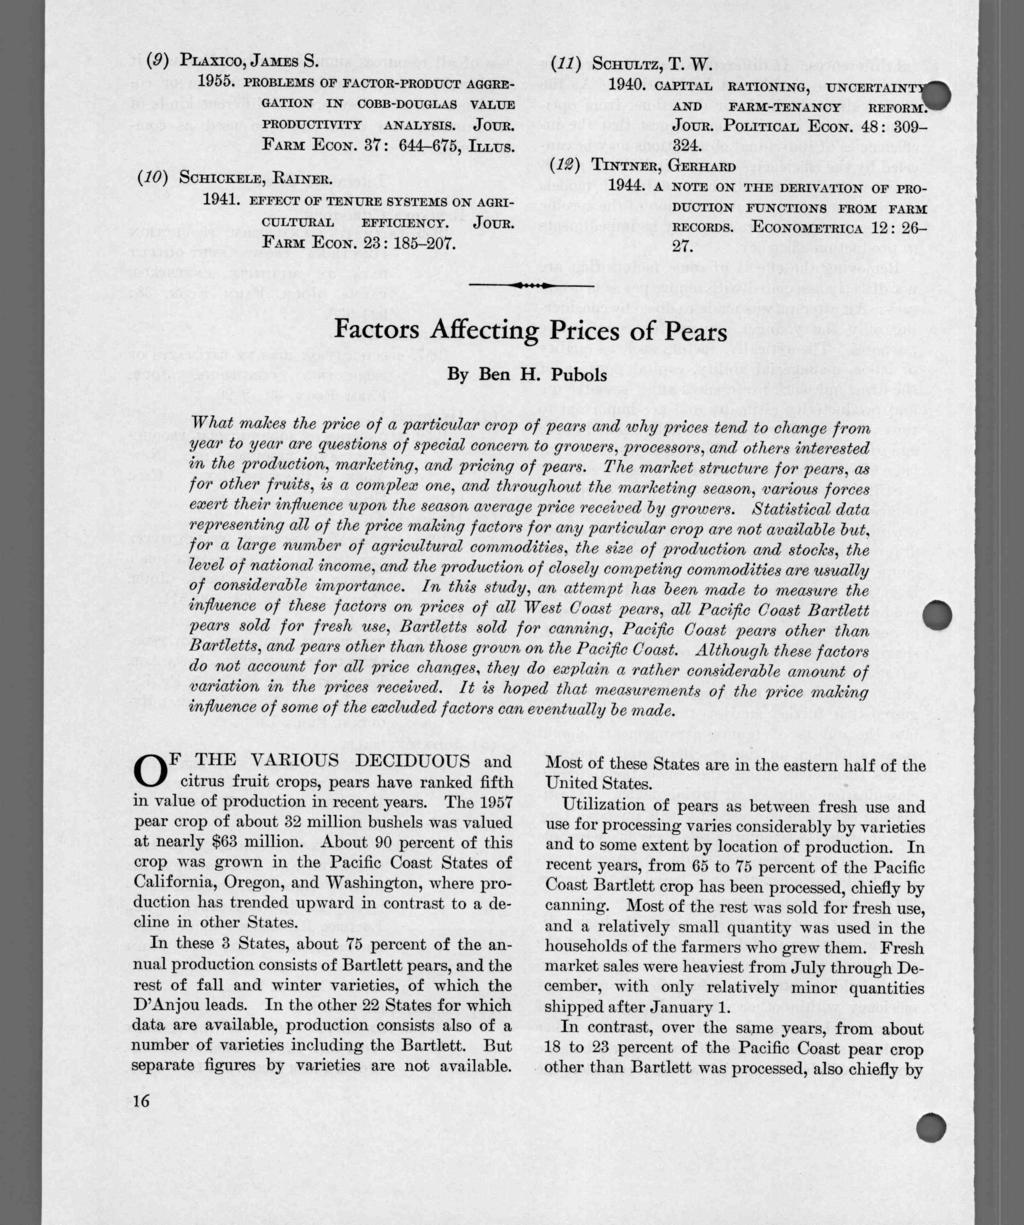 (9) PLAXICO, JAMES S. 1955. PROBLEMS OF FACTOR-PRODUCT AGGRE- GATION IN COBB-DOUGLAS VALUE PRODUCTIVITY ANALYSIS. JOUR. FARM ECON. 37: 644-675, ILLUS. (10) SCHICKELE, RAINER. 1941.